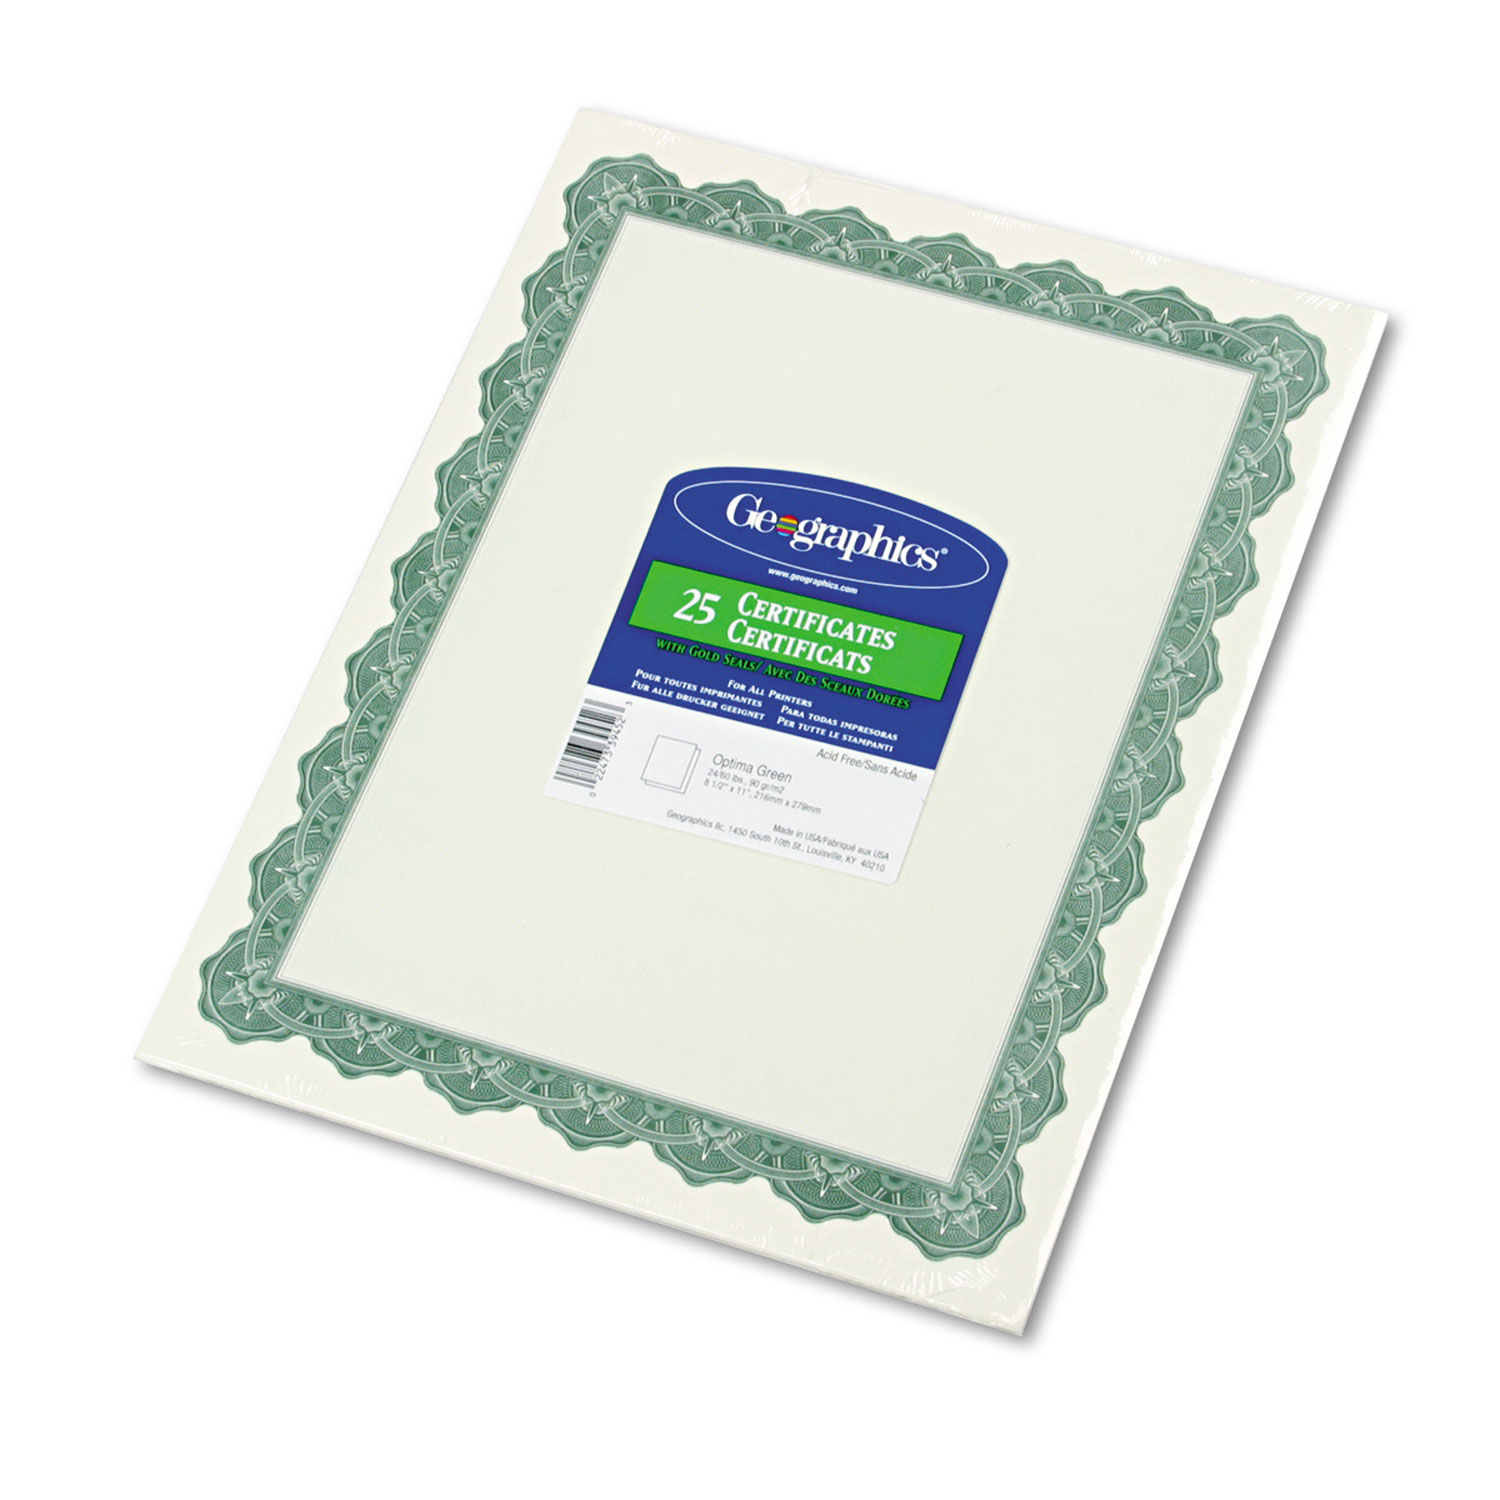 Parchment Paper Certificates by Geographicsandreg; GEO39452